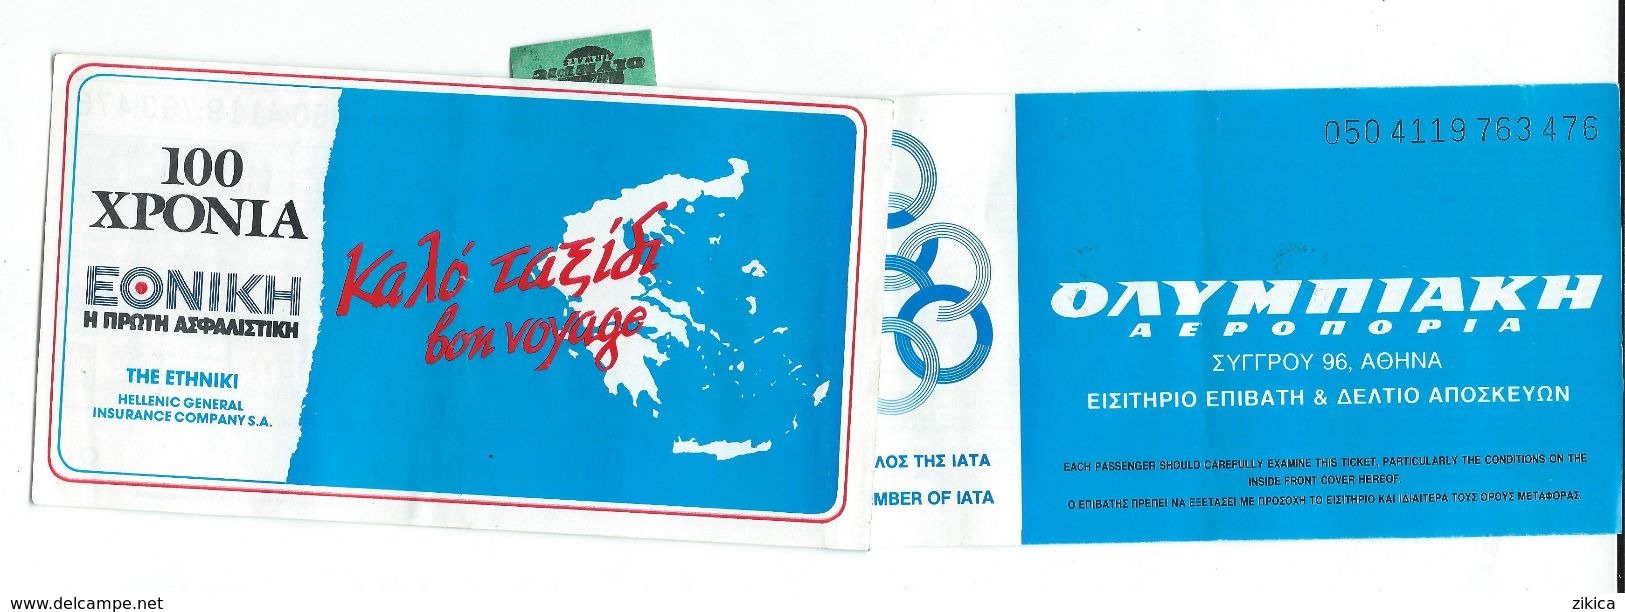 Transportation Tickets - One Way Ticket - Plane - Greece - Avio Company - Olympic Games Logo - Europa